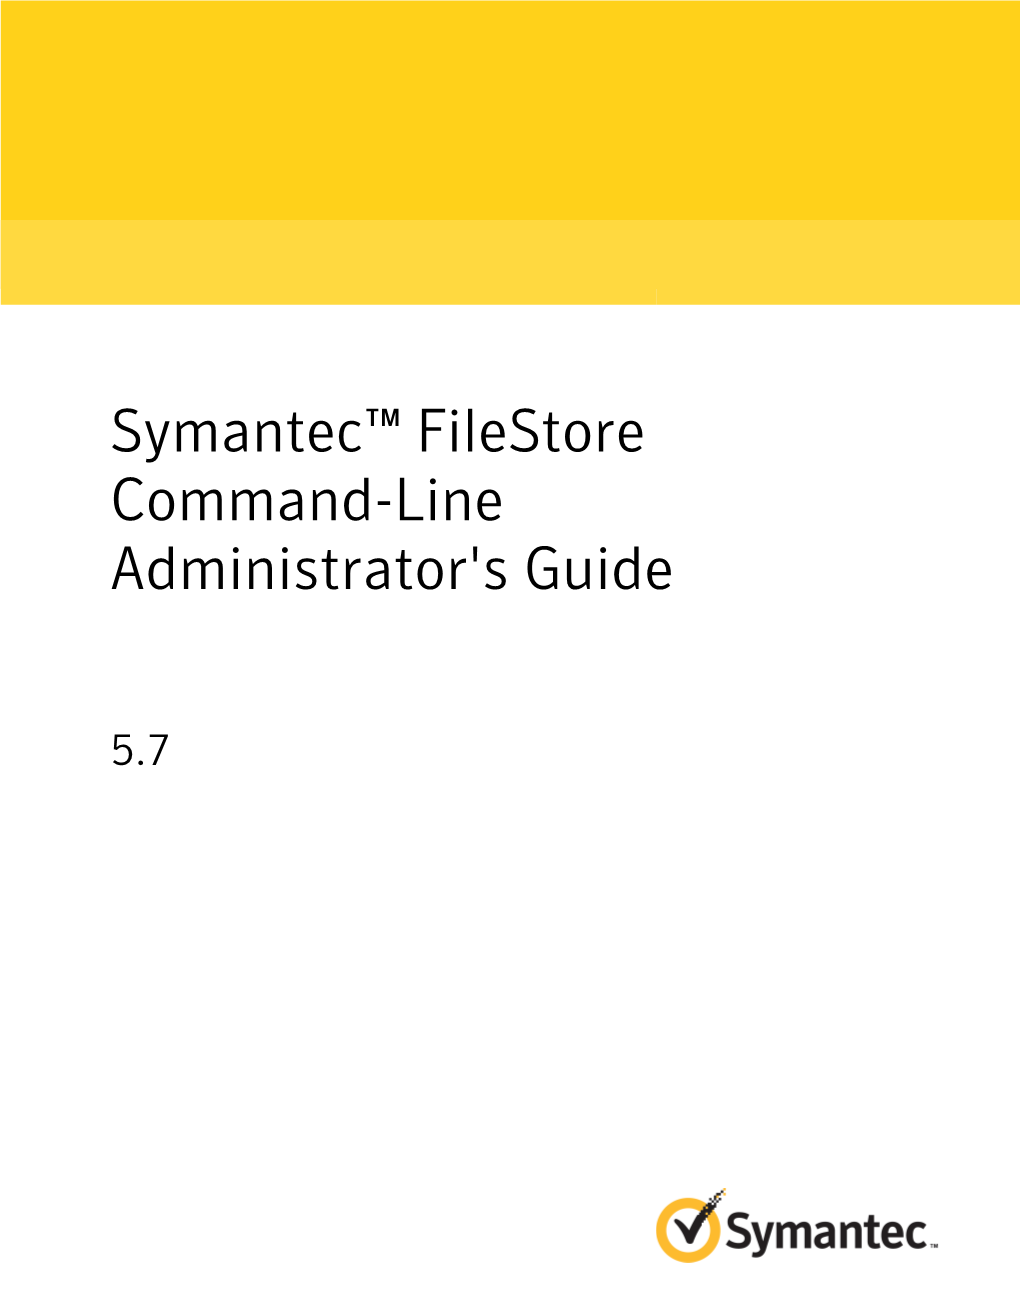 Symantec™ Filestore Command-Line Administrator's Guide